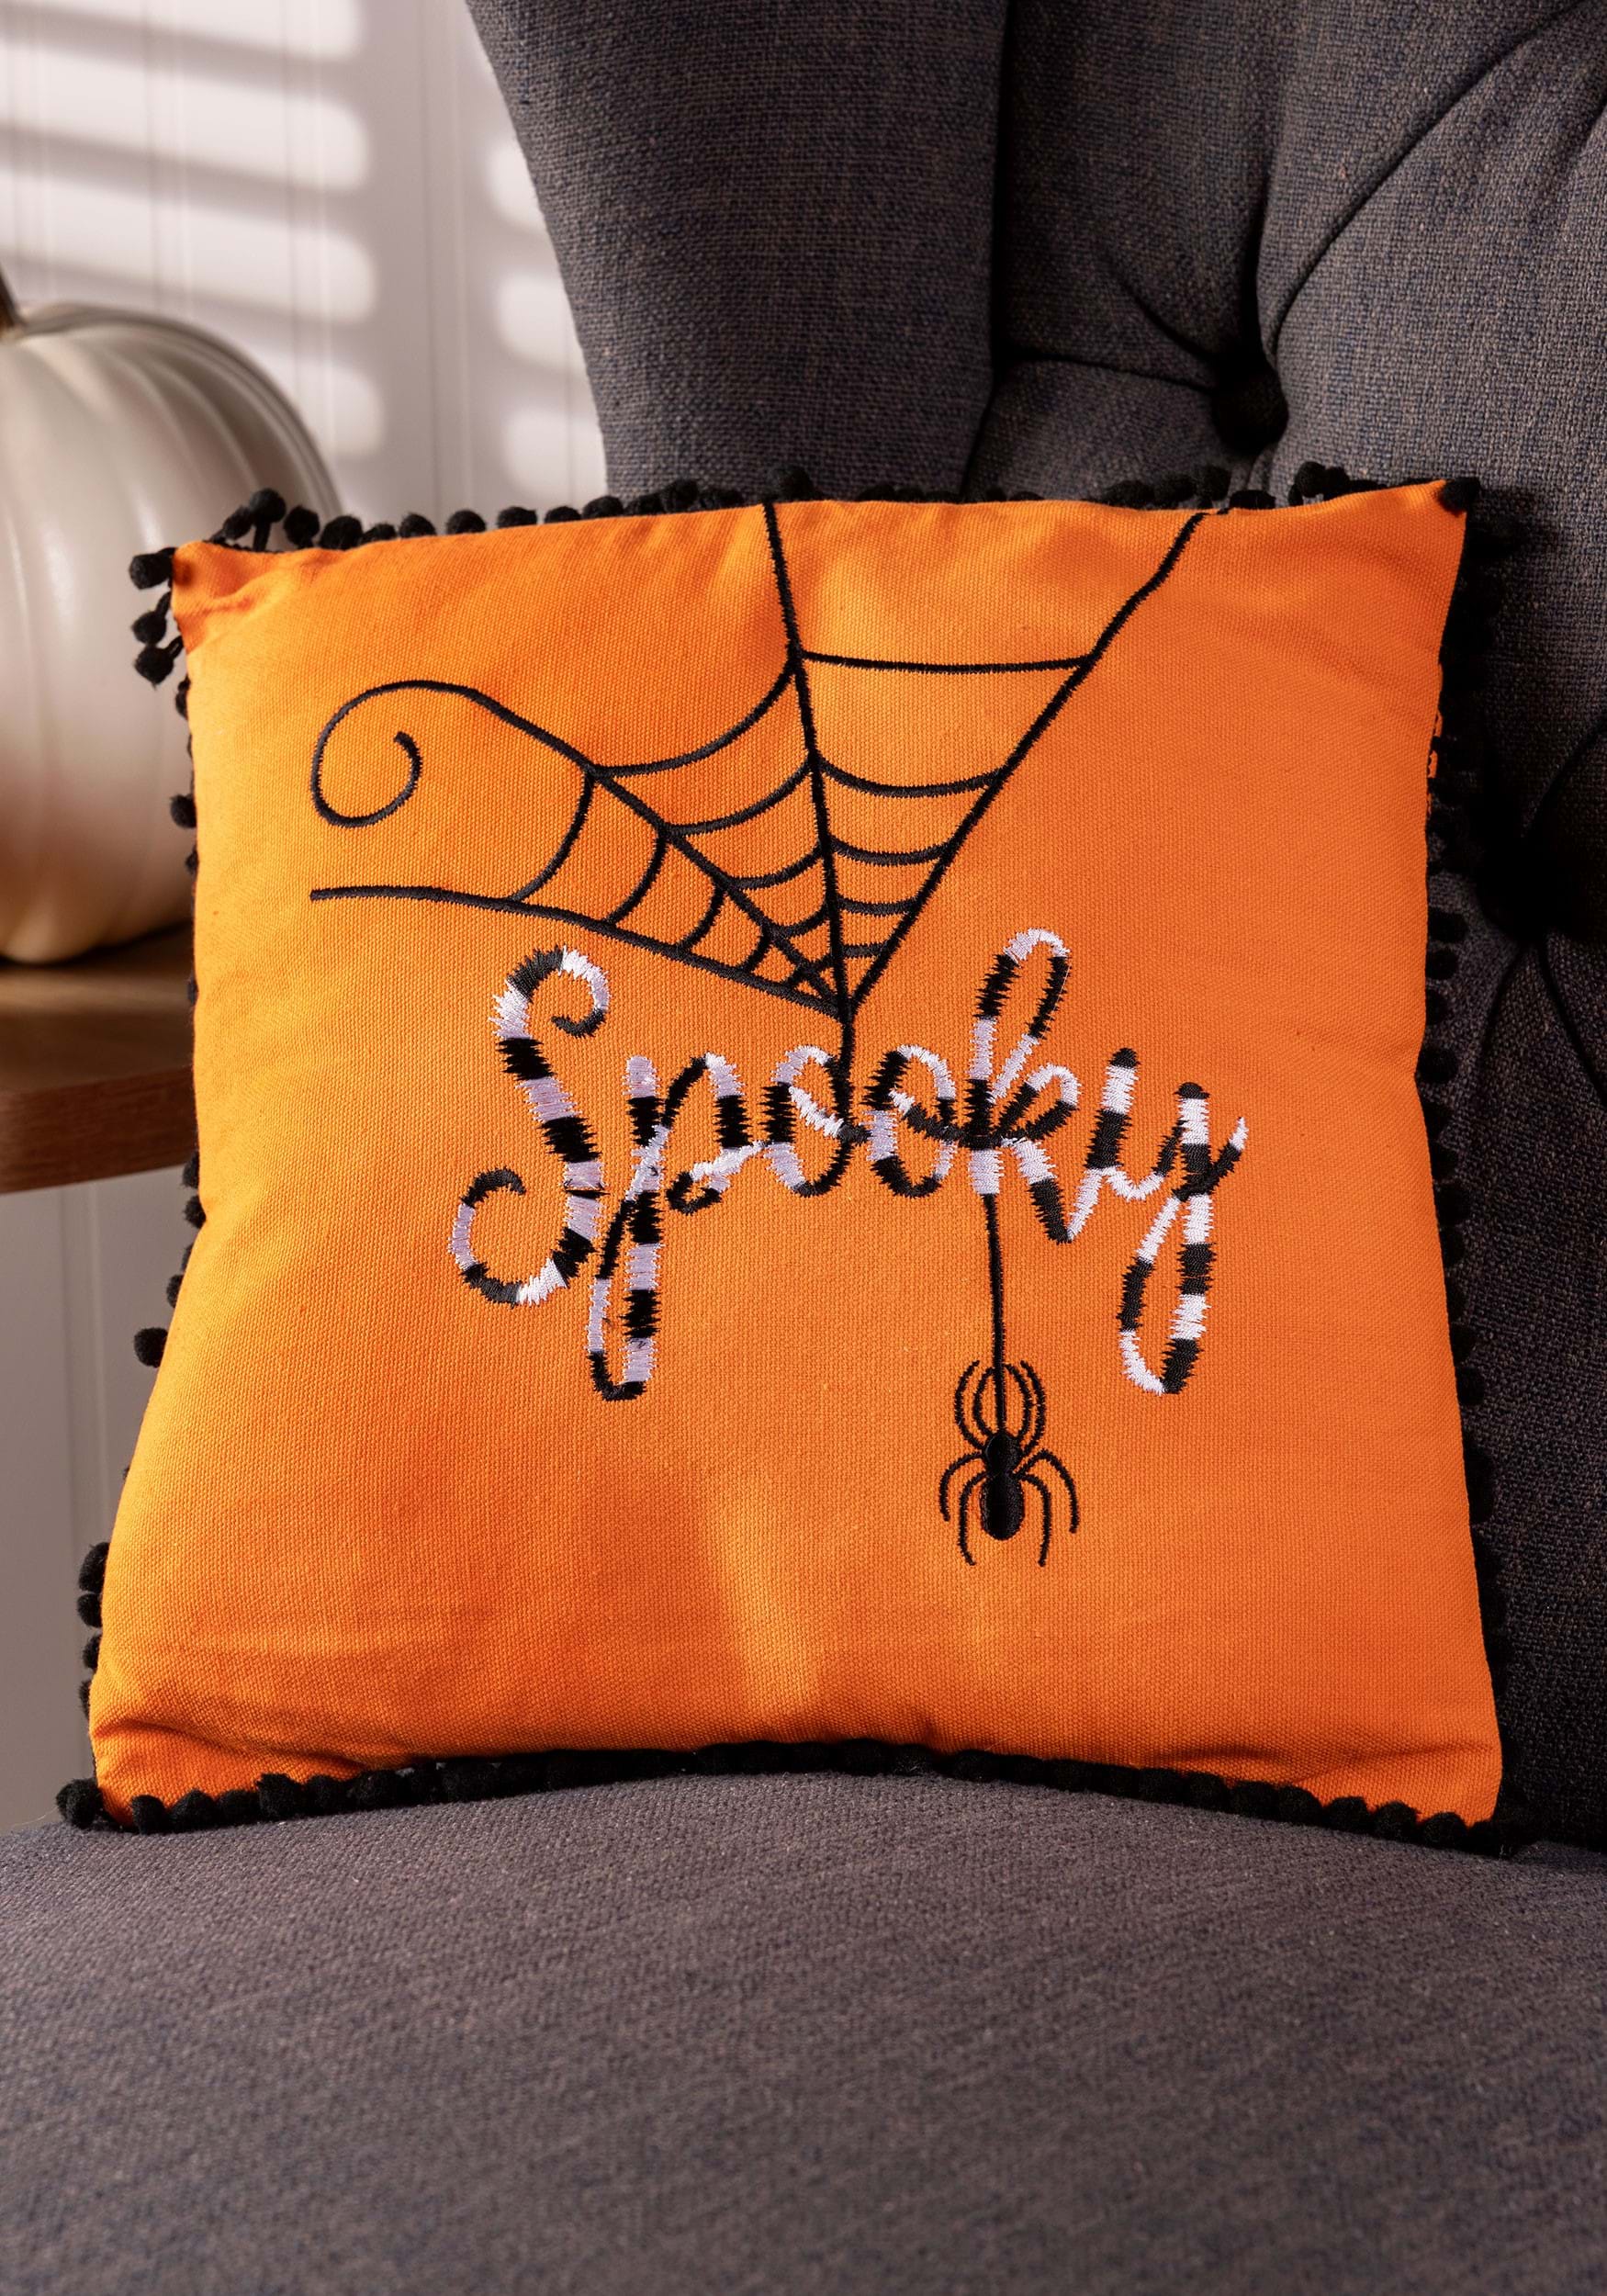 12 Orange Halloween Pillow W/ Black And White Embroidery